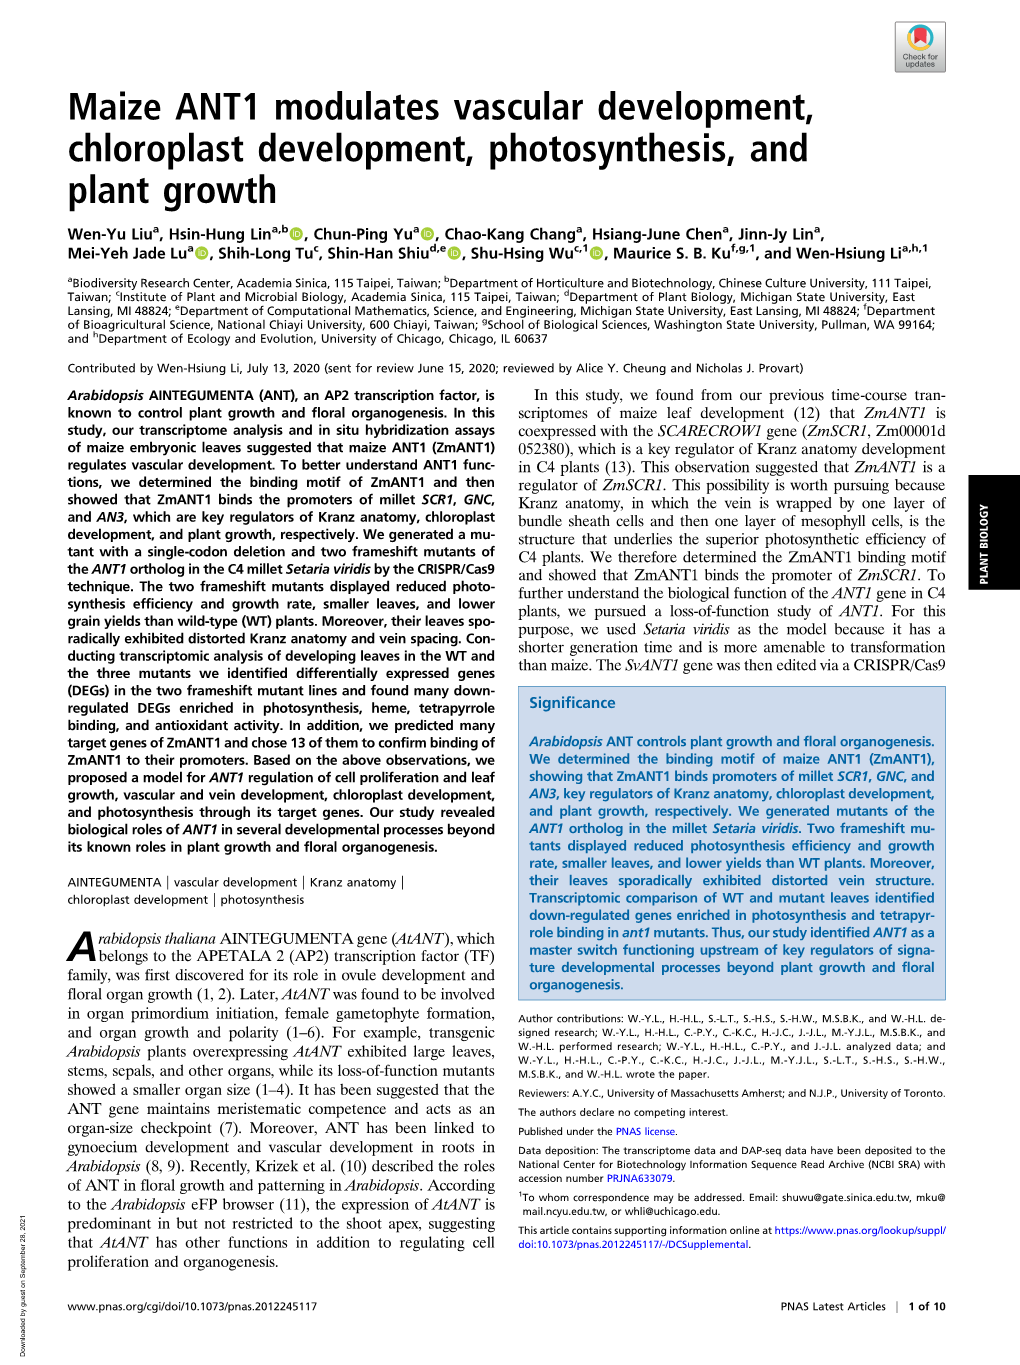 Maize ANT1 Modulates Vascular Development, Chloroplast Development, Photosynthesis, and Plant Growth